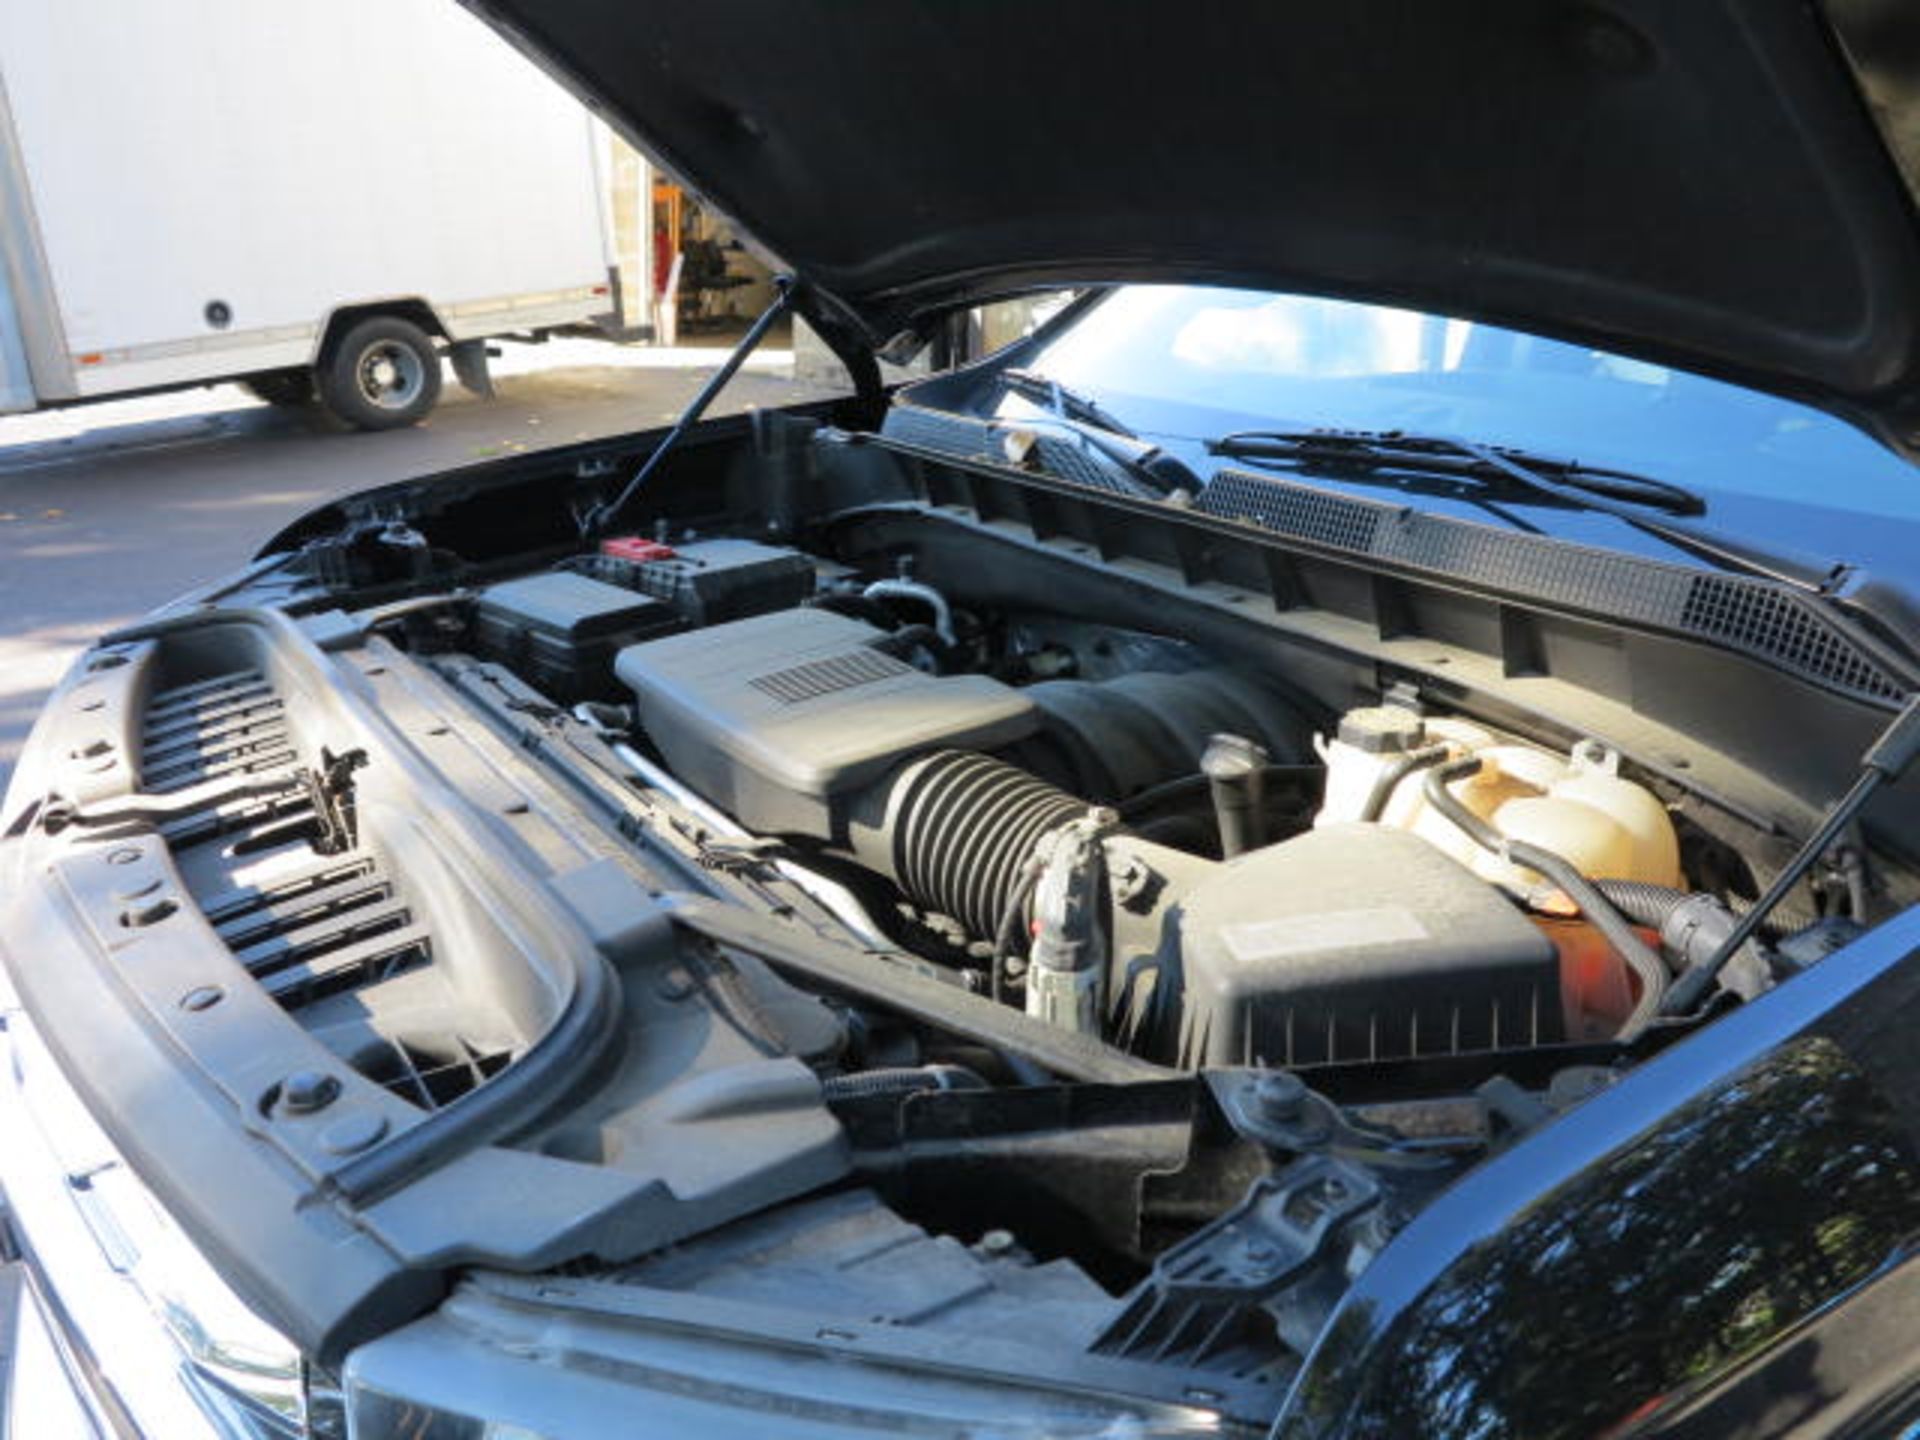 2019 Chevy Silverado 4WD LTZ DBL, 5.3L Eco-Tech V8 with Transmission, 8 Speed Automatic, LTZ Plus - Image 9 of 13